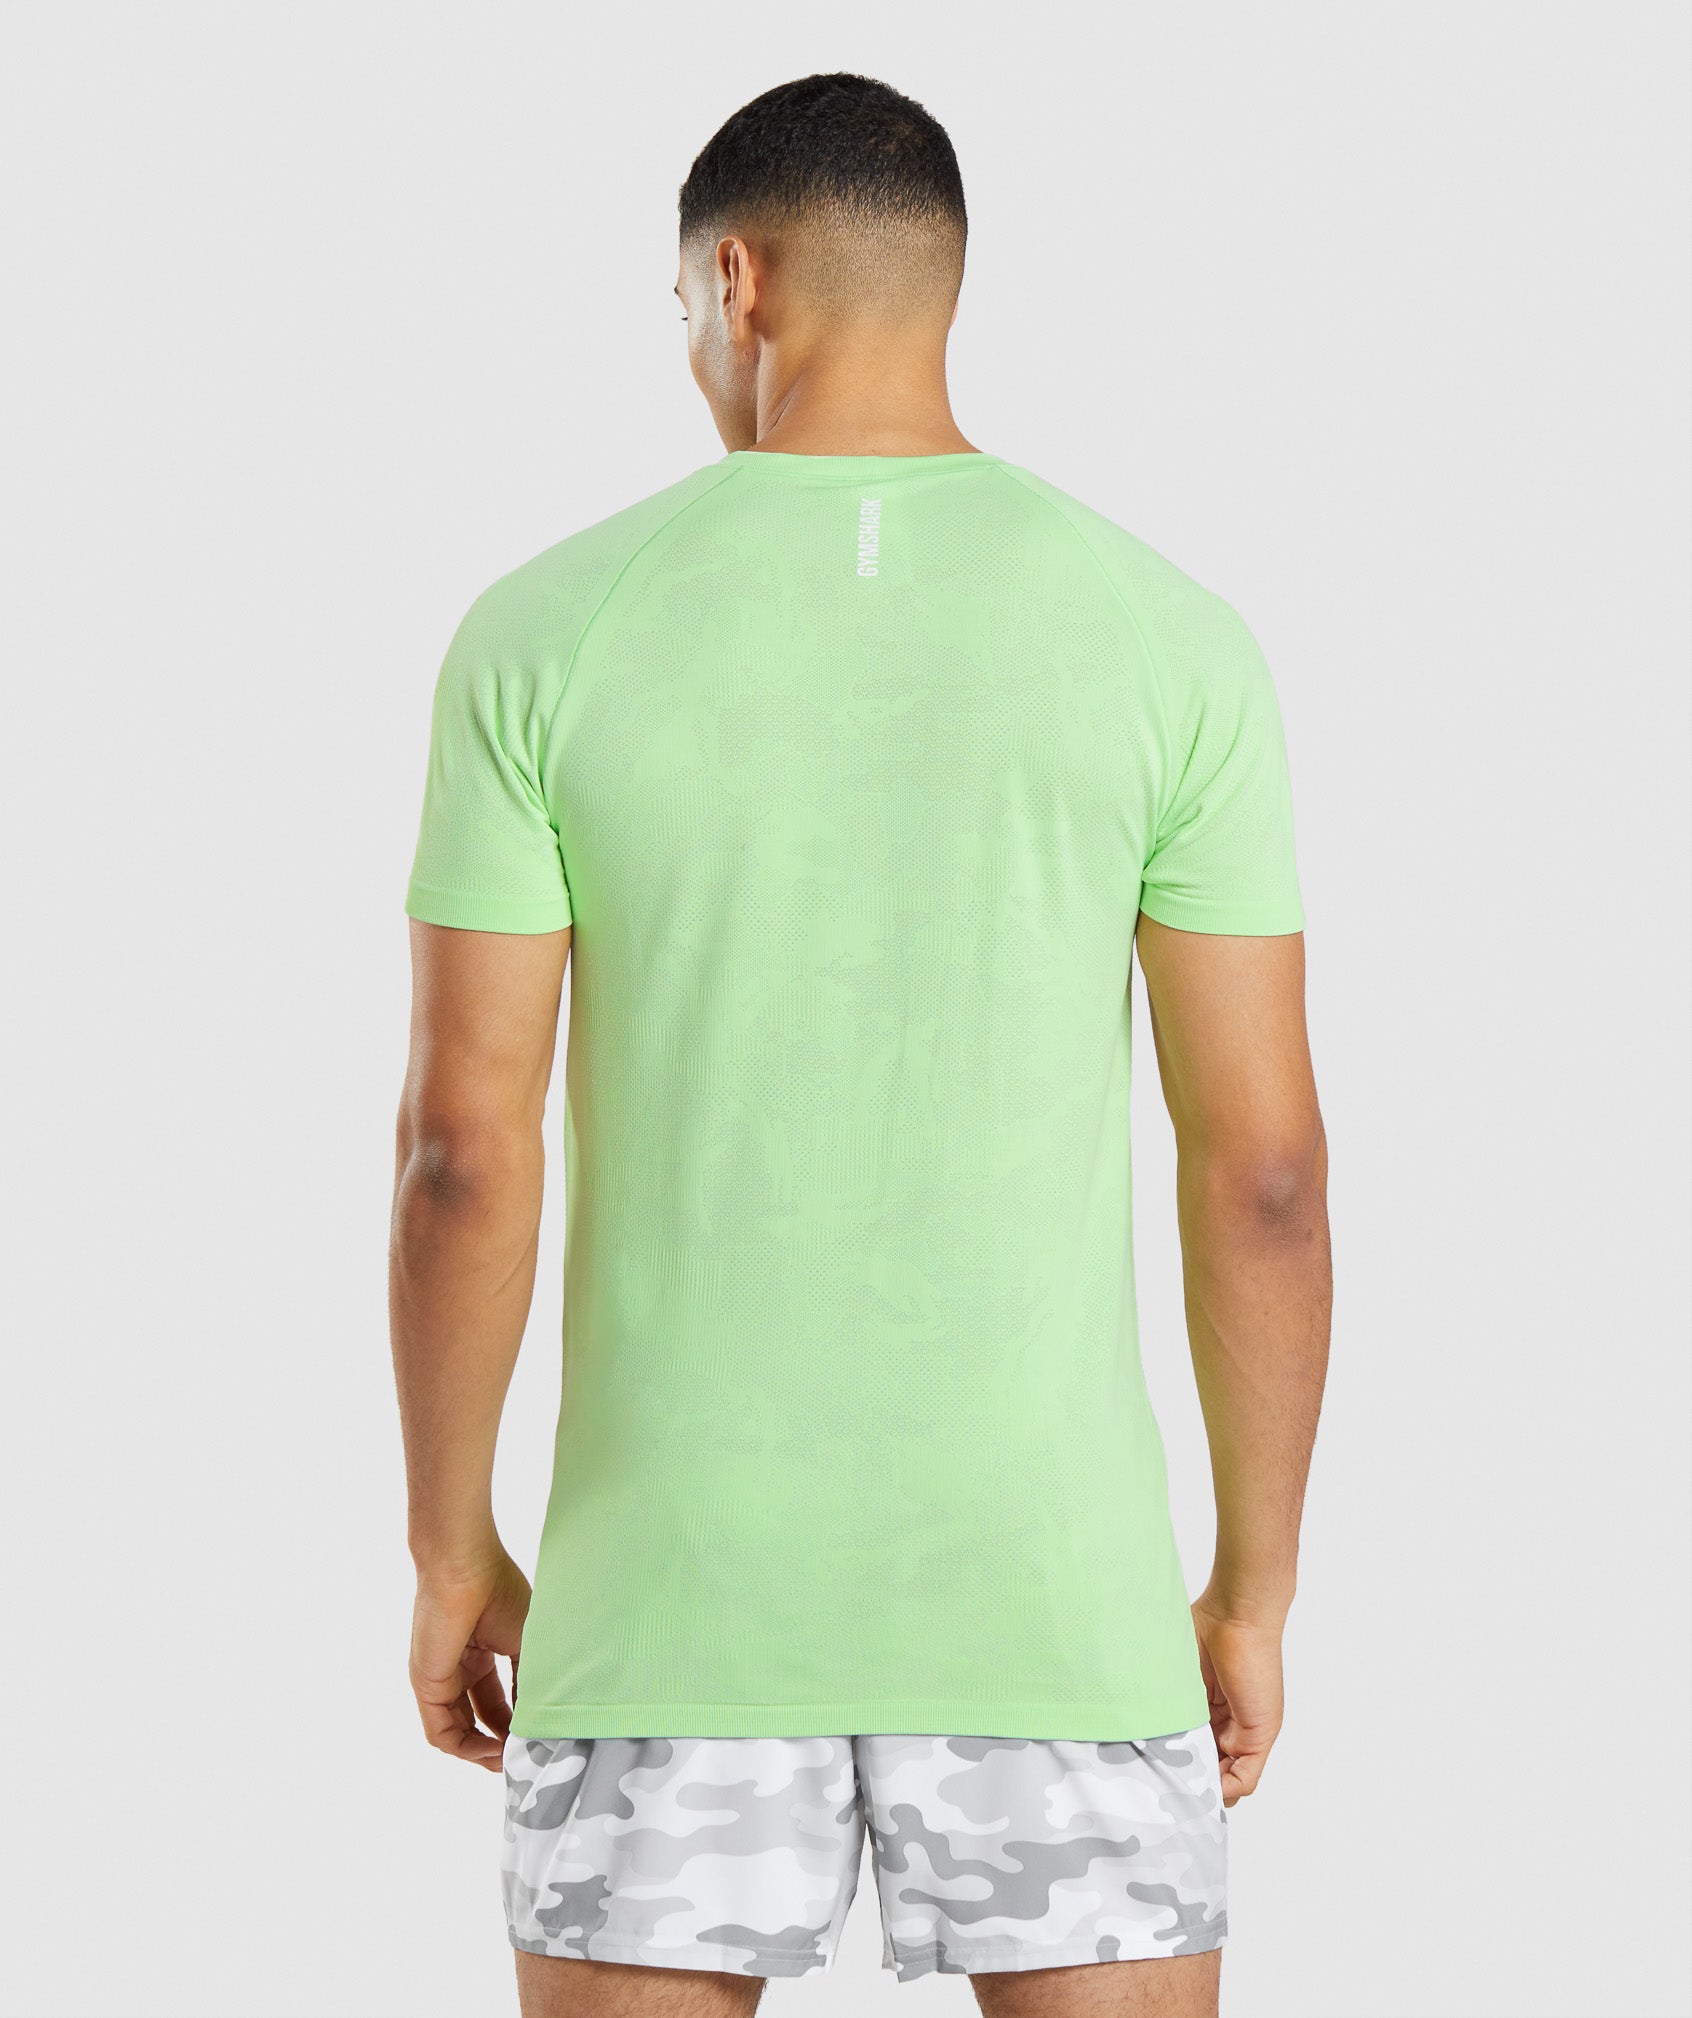 Geo Seamless T-Shirt in Bali Green/White